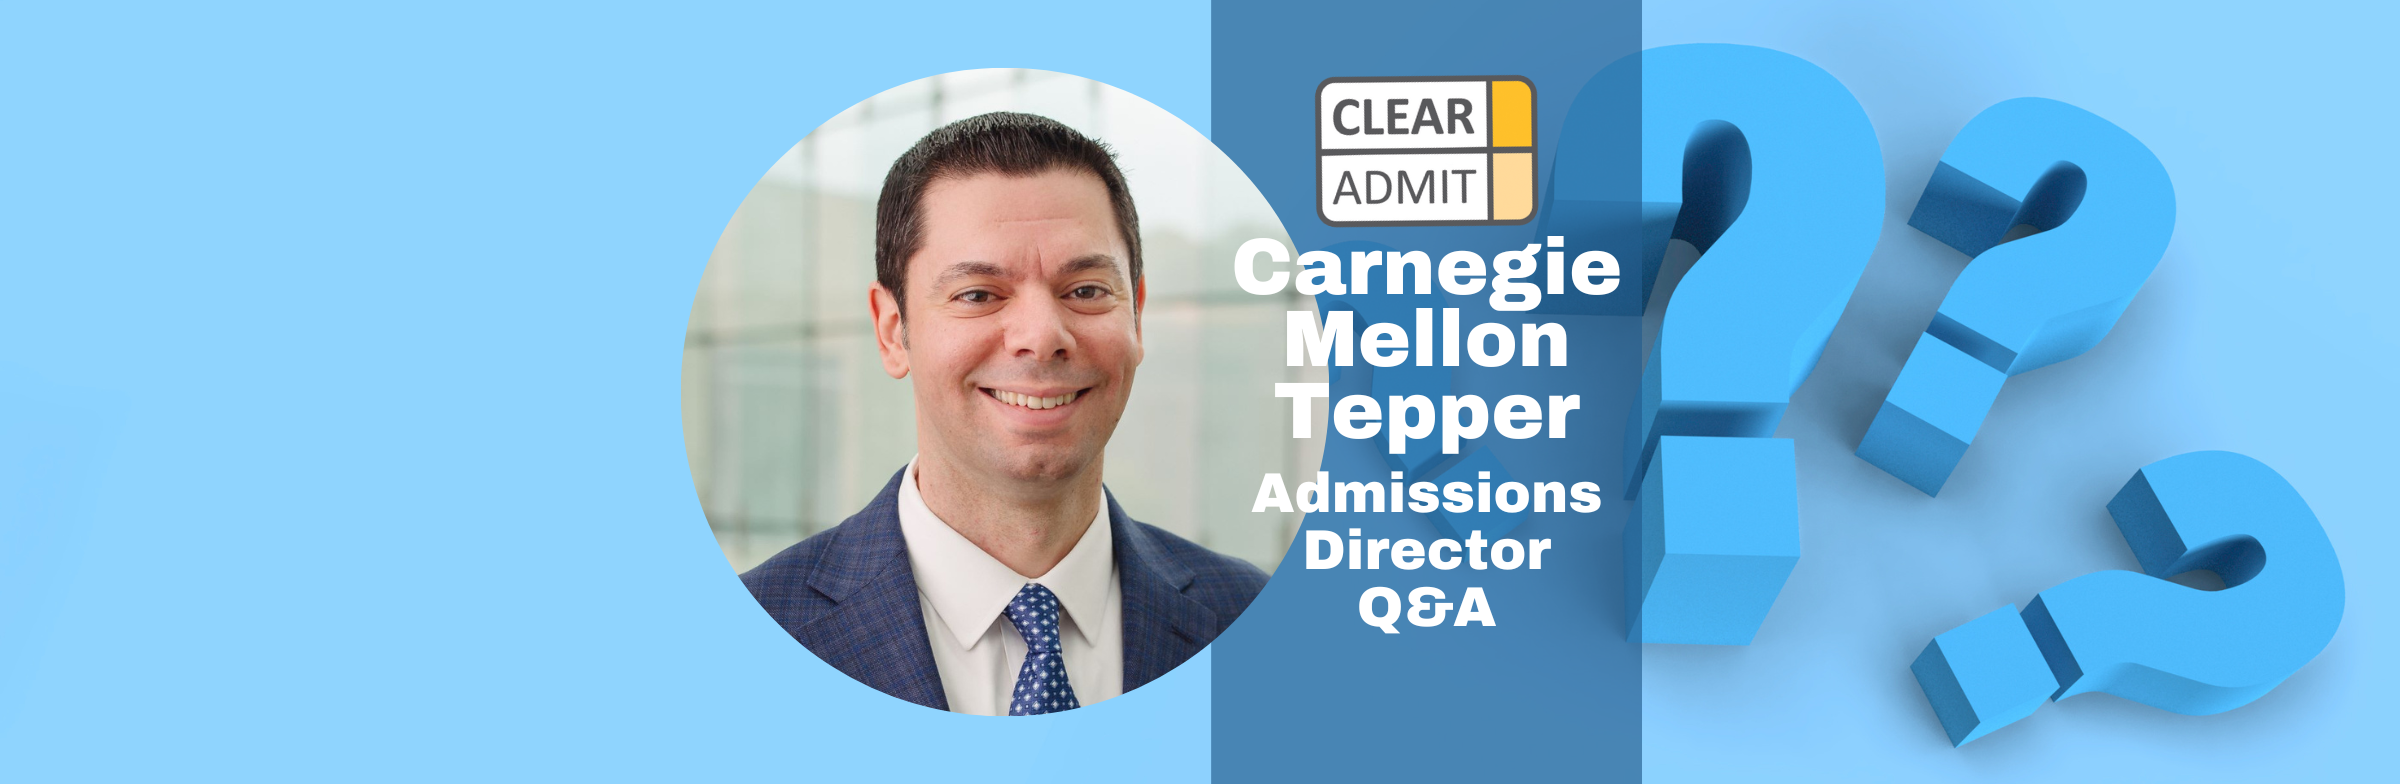 Image for Admission Director Q&A: J.R. McGrath of Carnegie Mellon Tepper